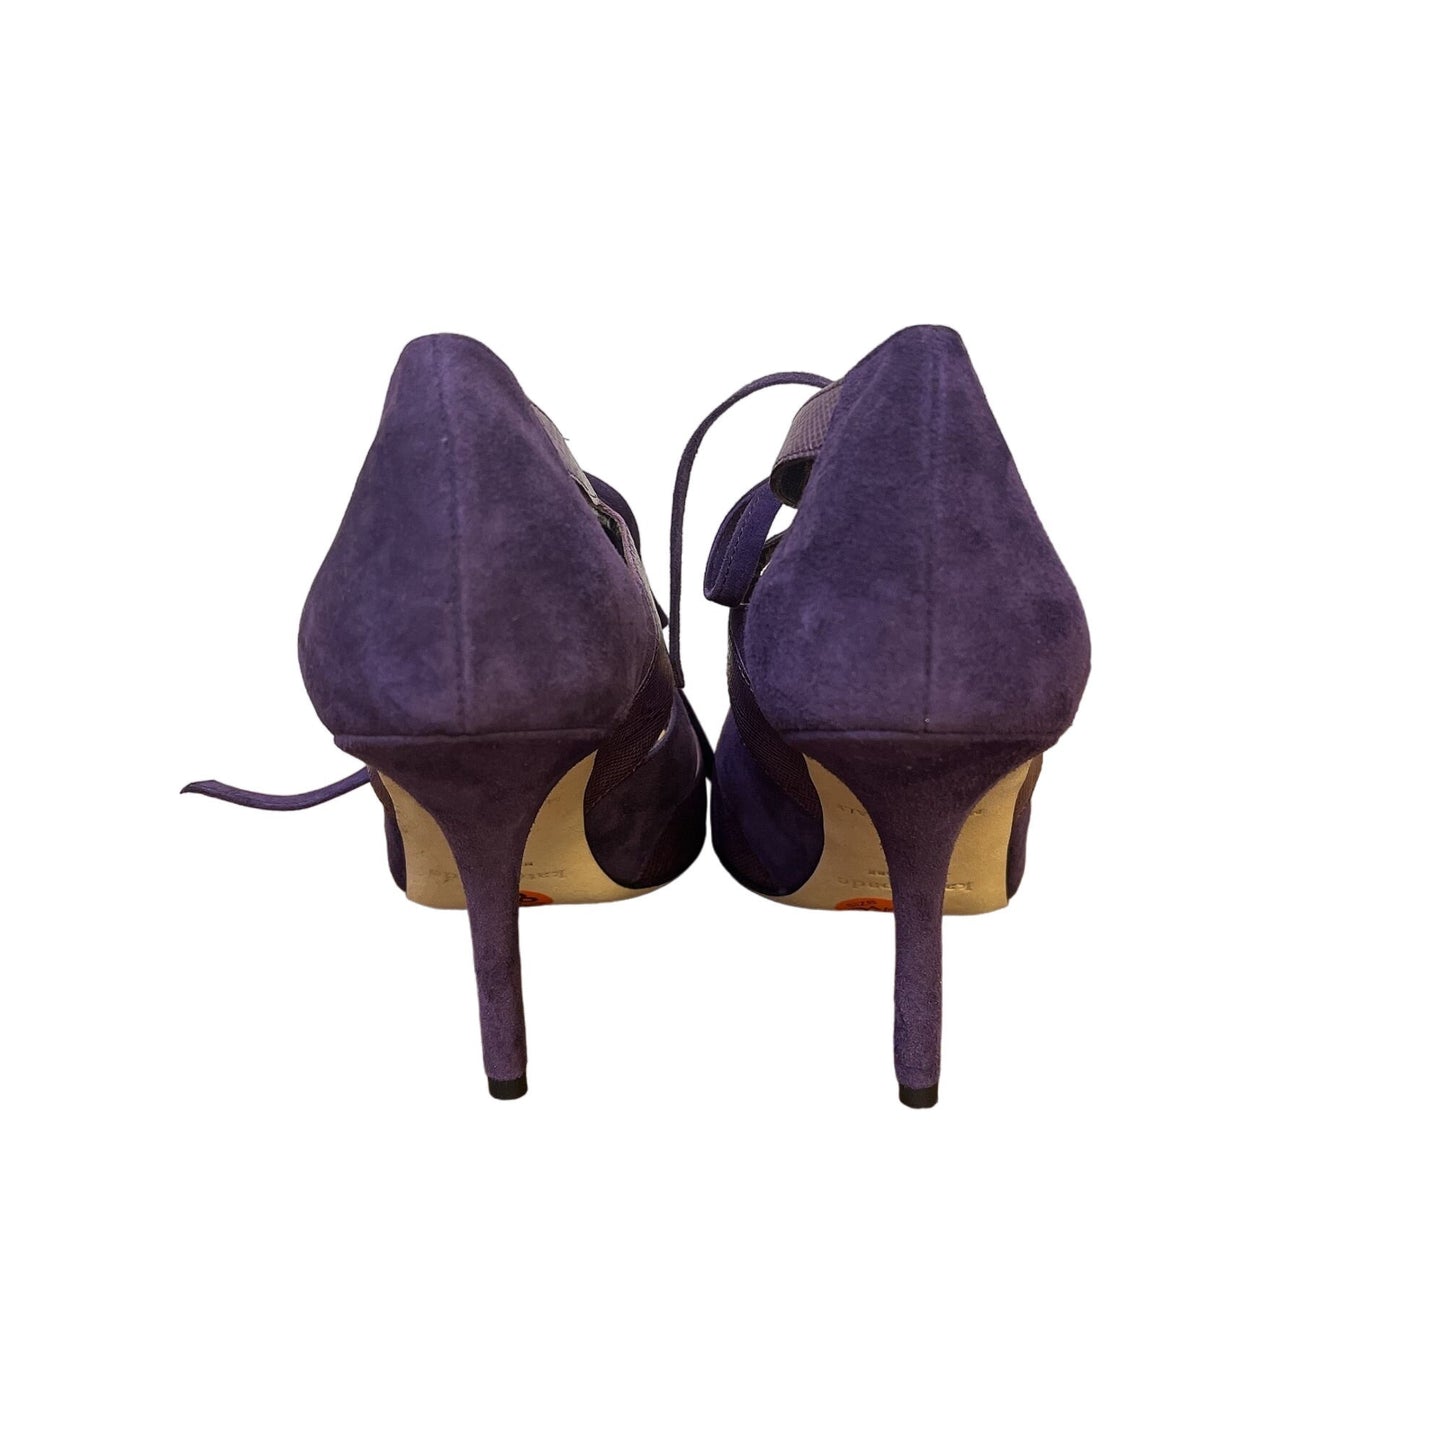 *Kate Spade Purple Leather Suede Heels Size 8.5